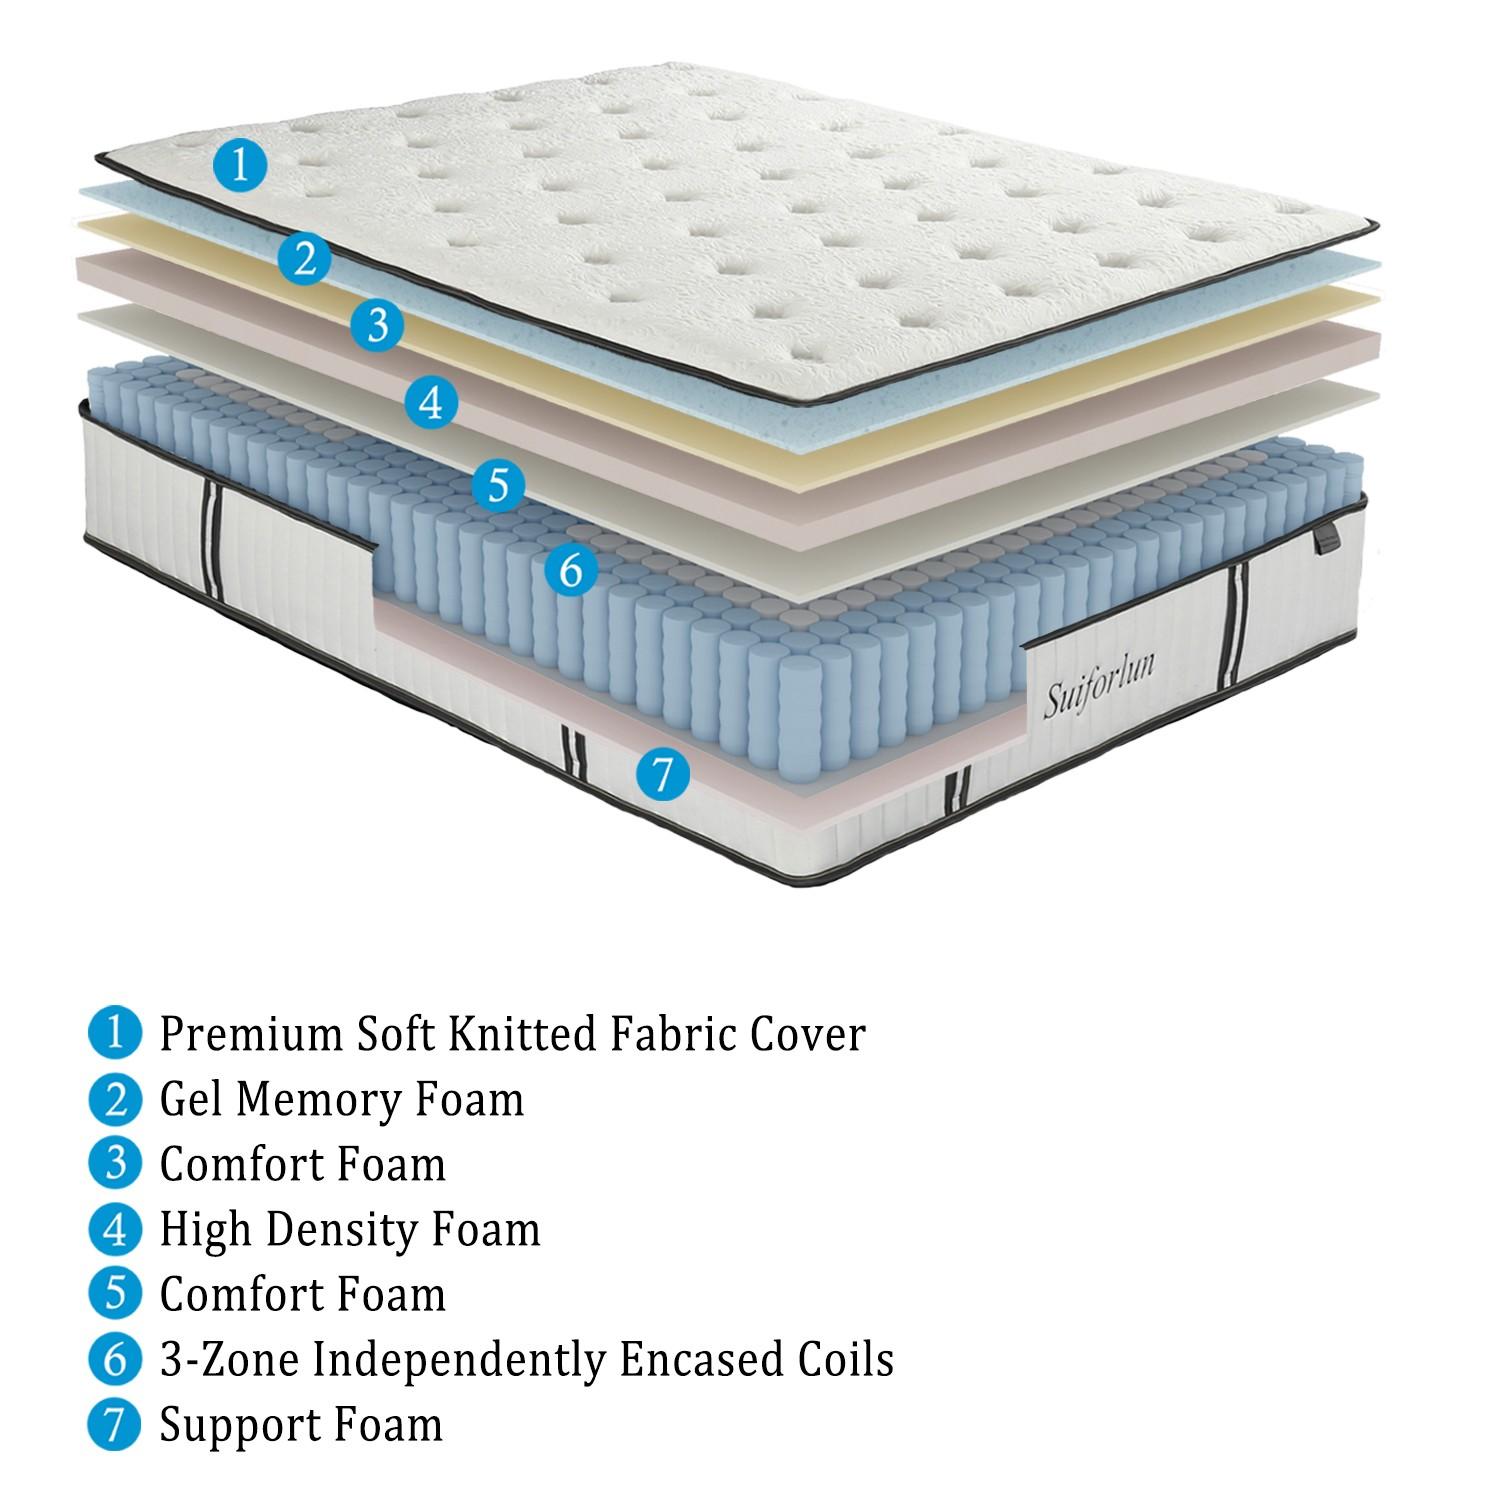 Suiforlun mattress hybrid bed looking for buyer-2